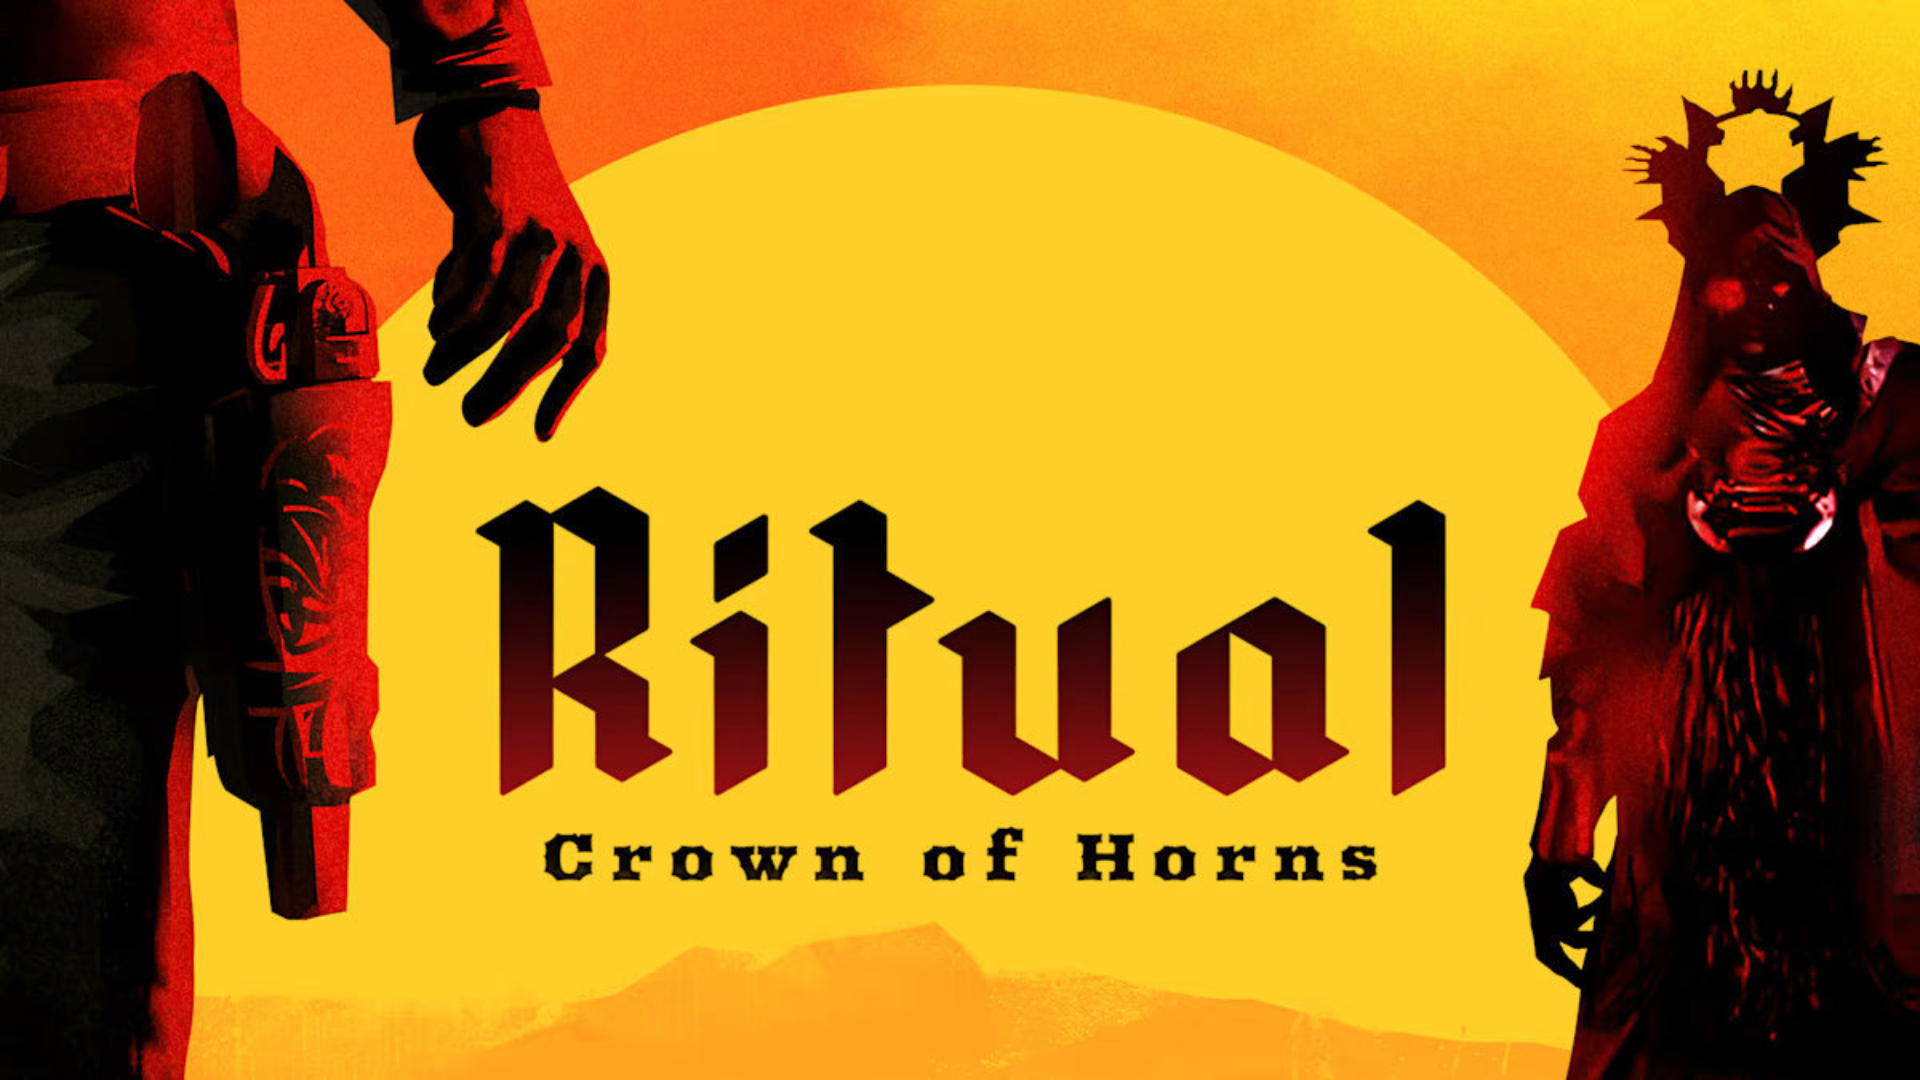 Cowboy games - Ritual: Crown of Thorns